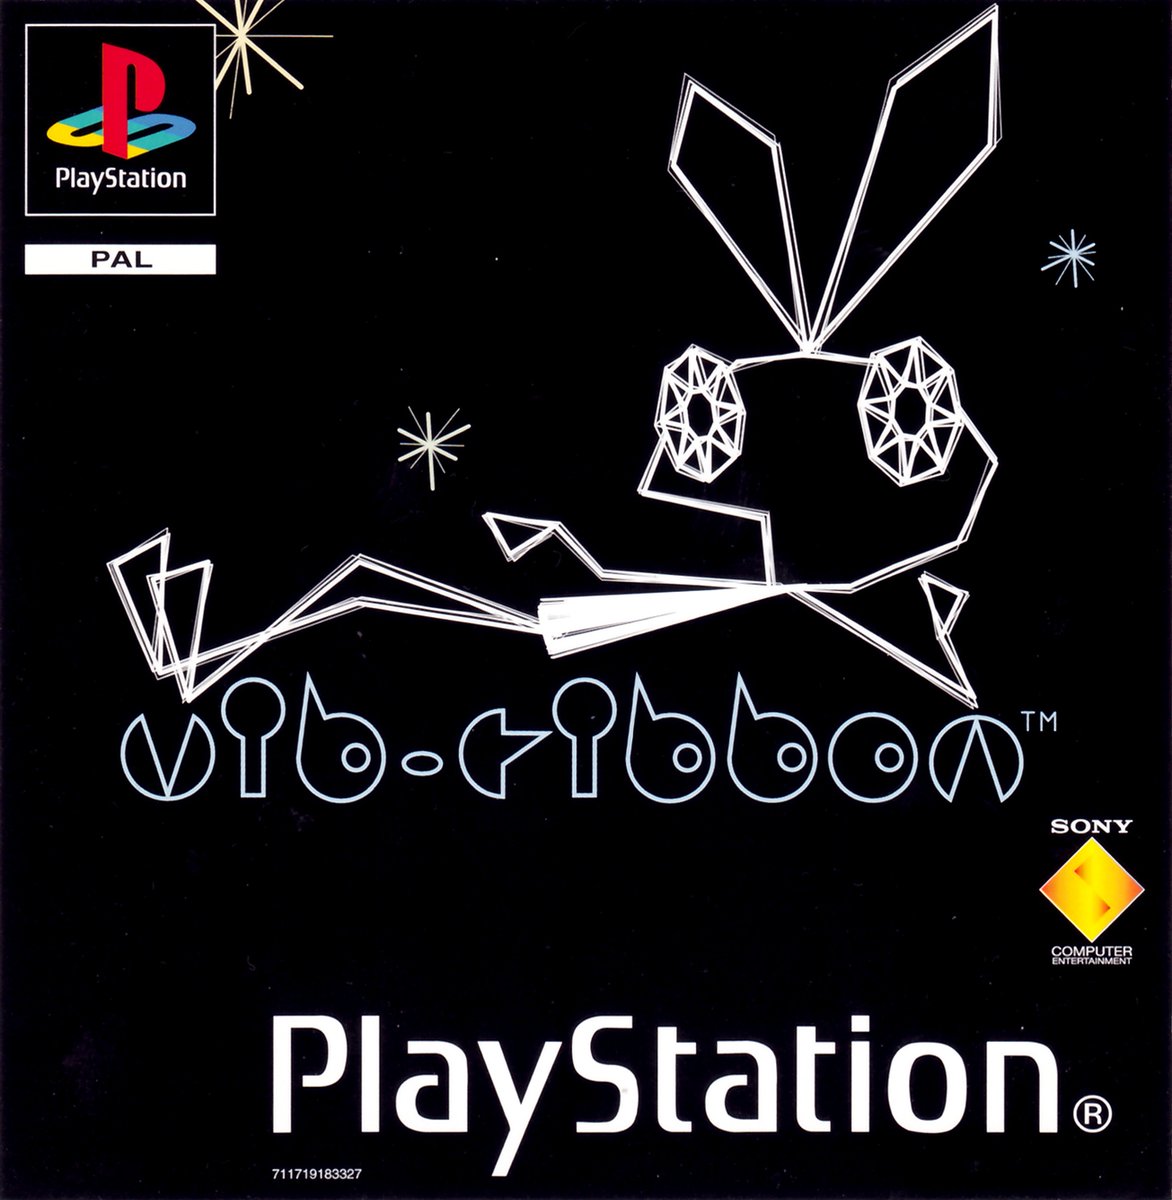 RT @CoolBoxArt: Vib-Ribbon / PlayStation / SCEE / 2000 https://t.co/QP9Pguo8bK